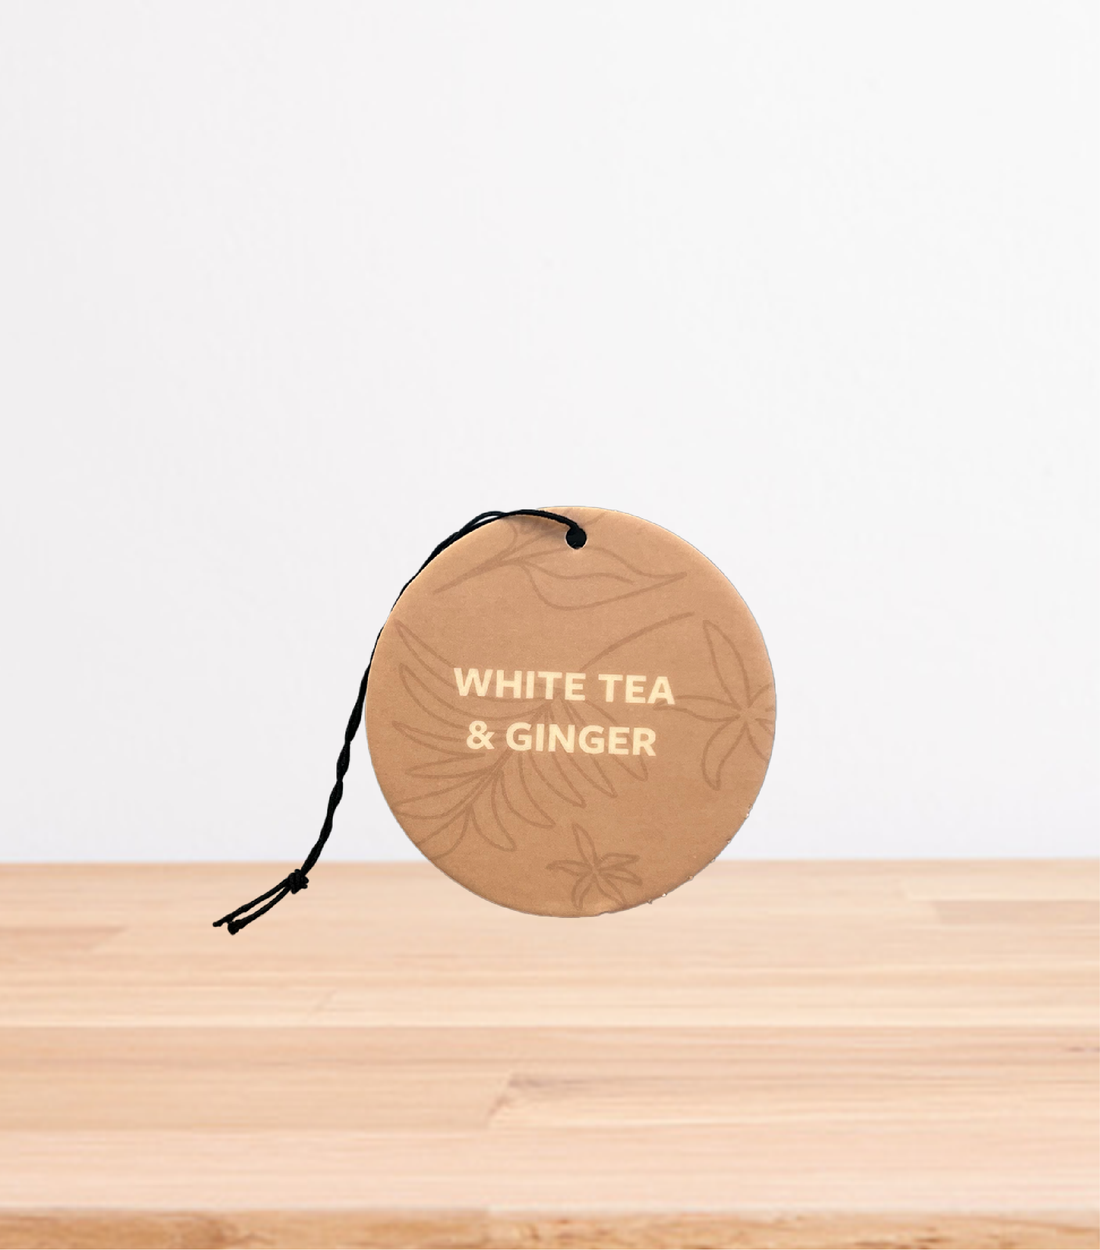 A White Tea &amp; Ginger Car Freshener on a wooden table.